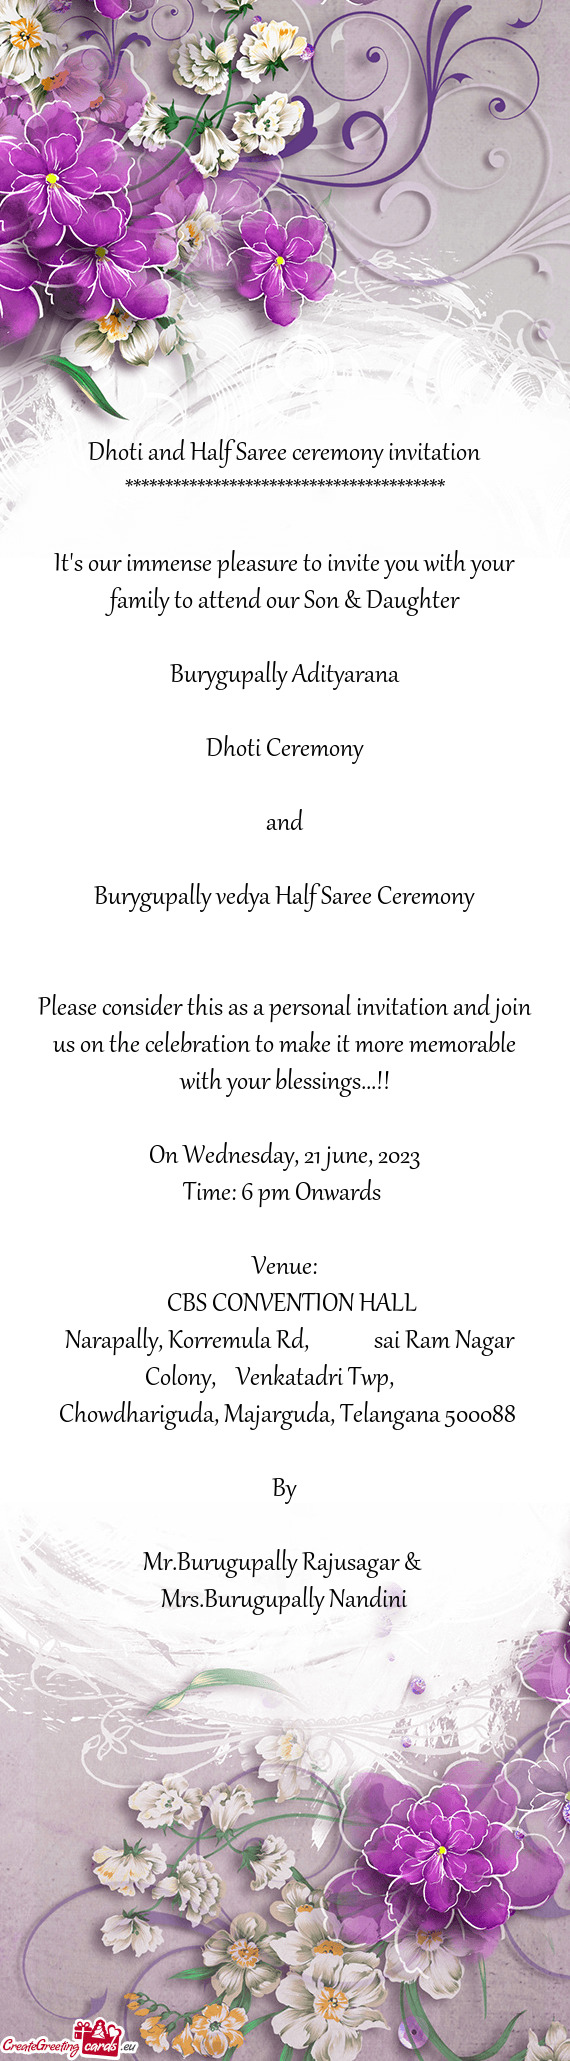 Burygupally vedya Half Saree Ceremony